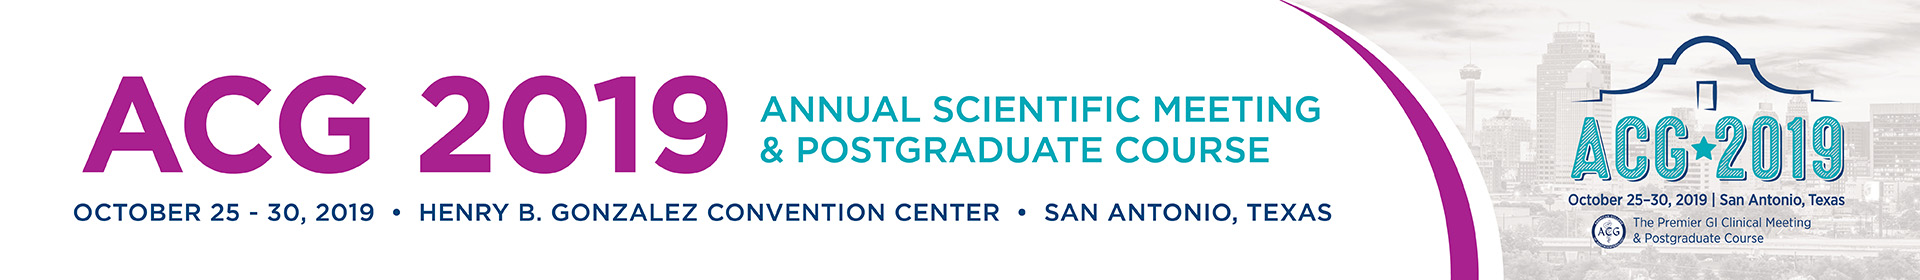 ACG 2019 Annual Scientific Meeting and Postgraduate Course